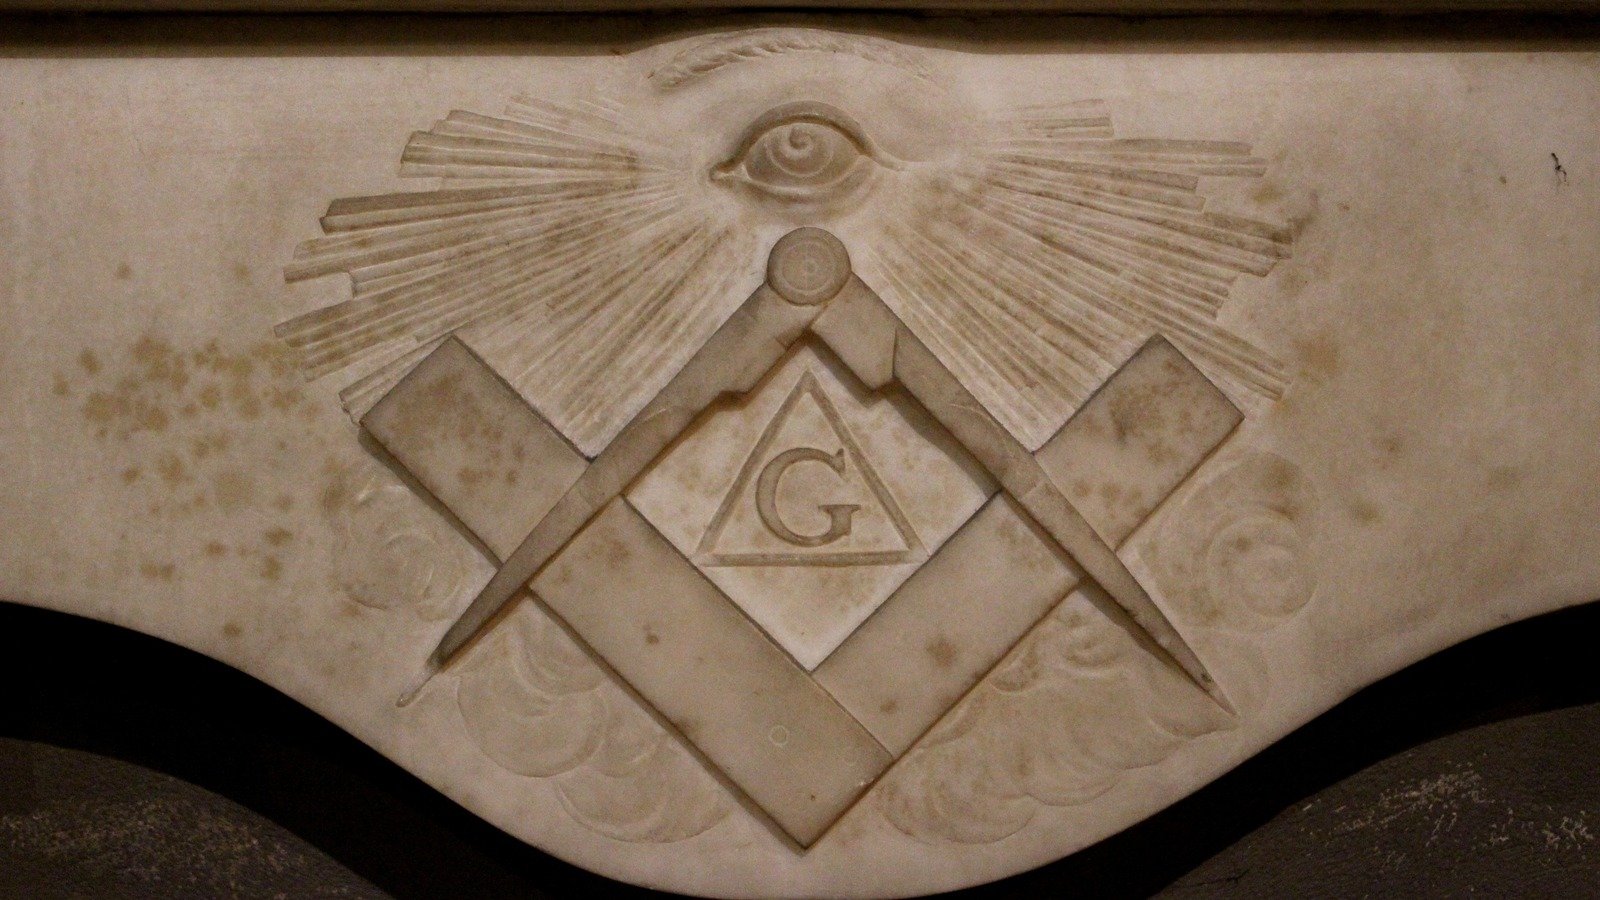 What Do Freemasons Actually Believe?